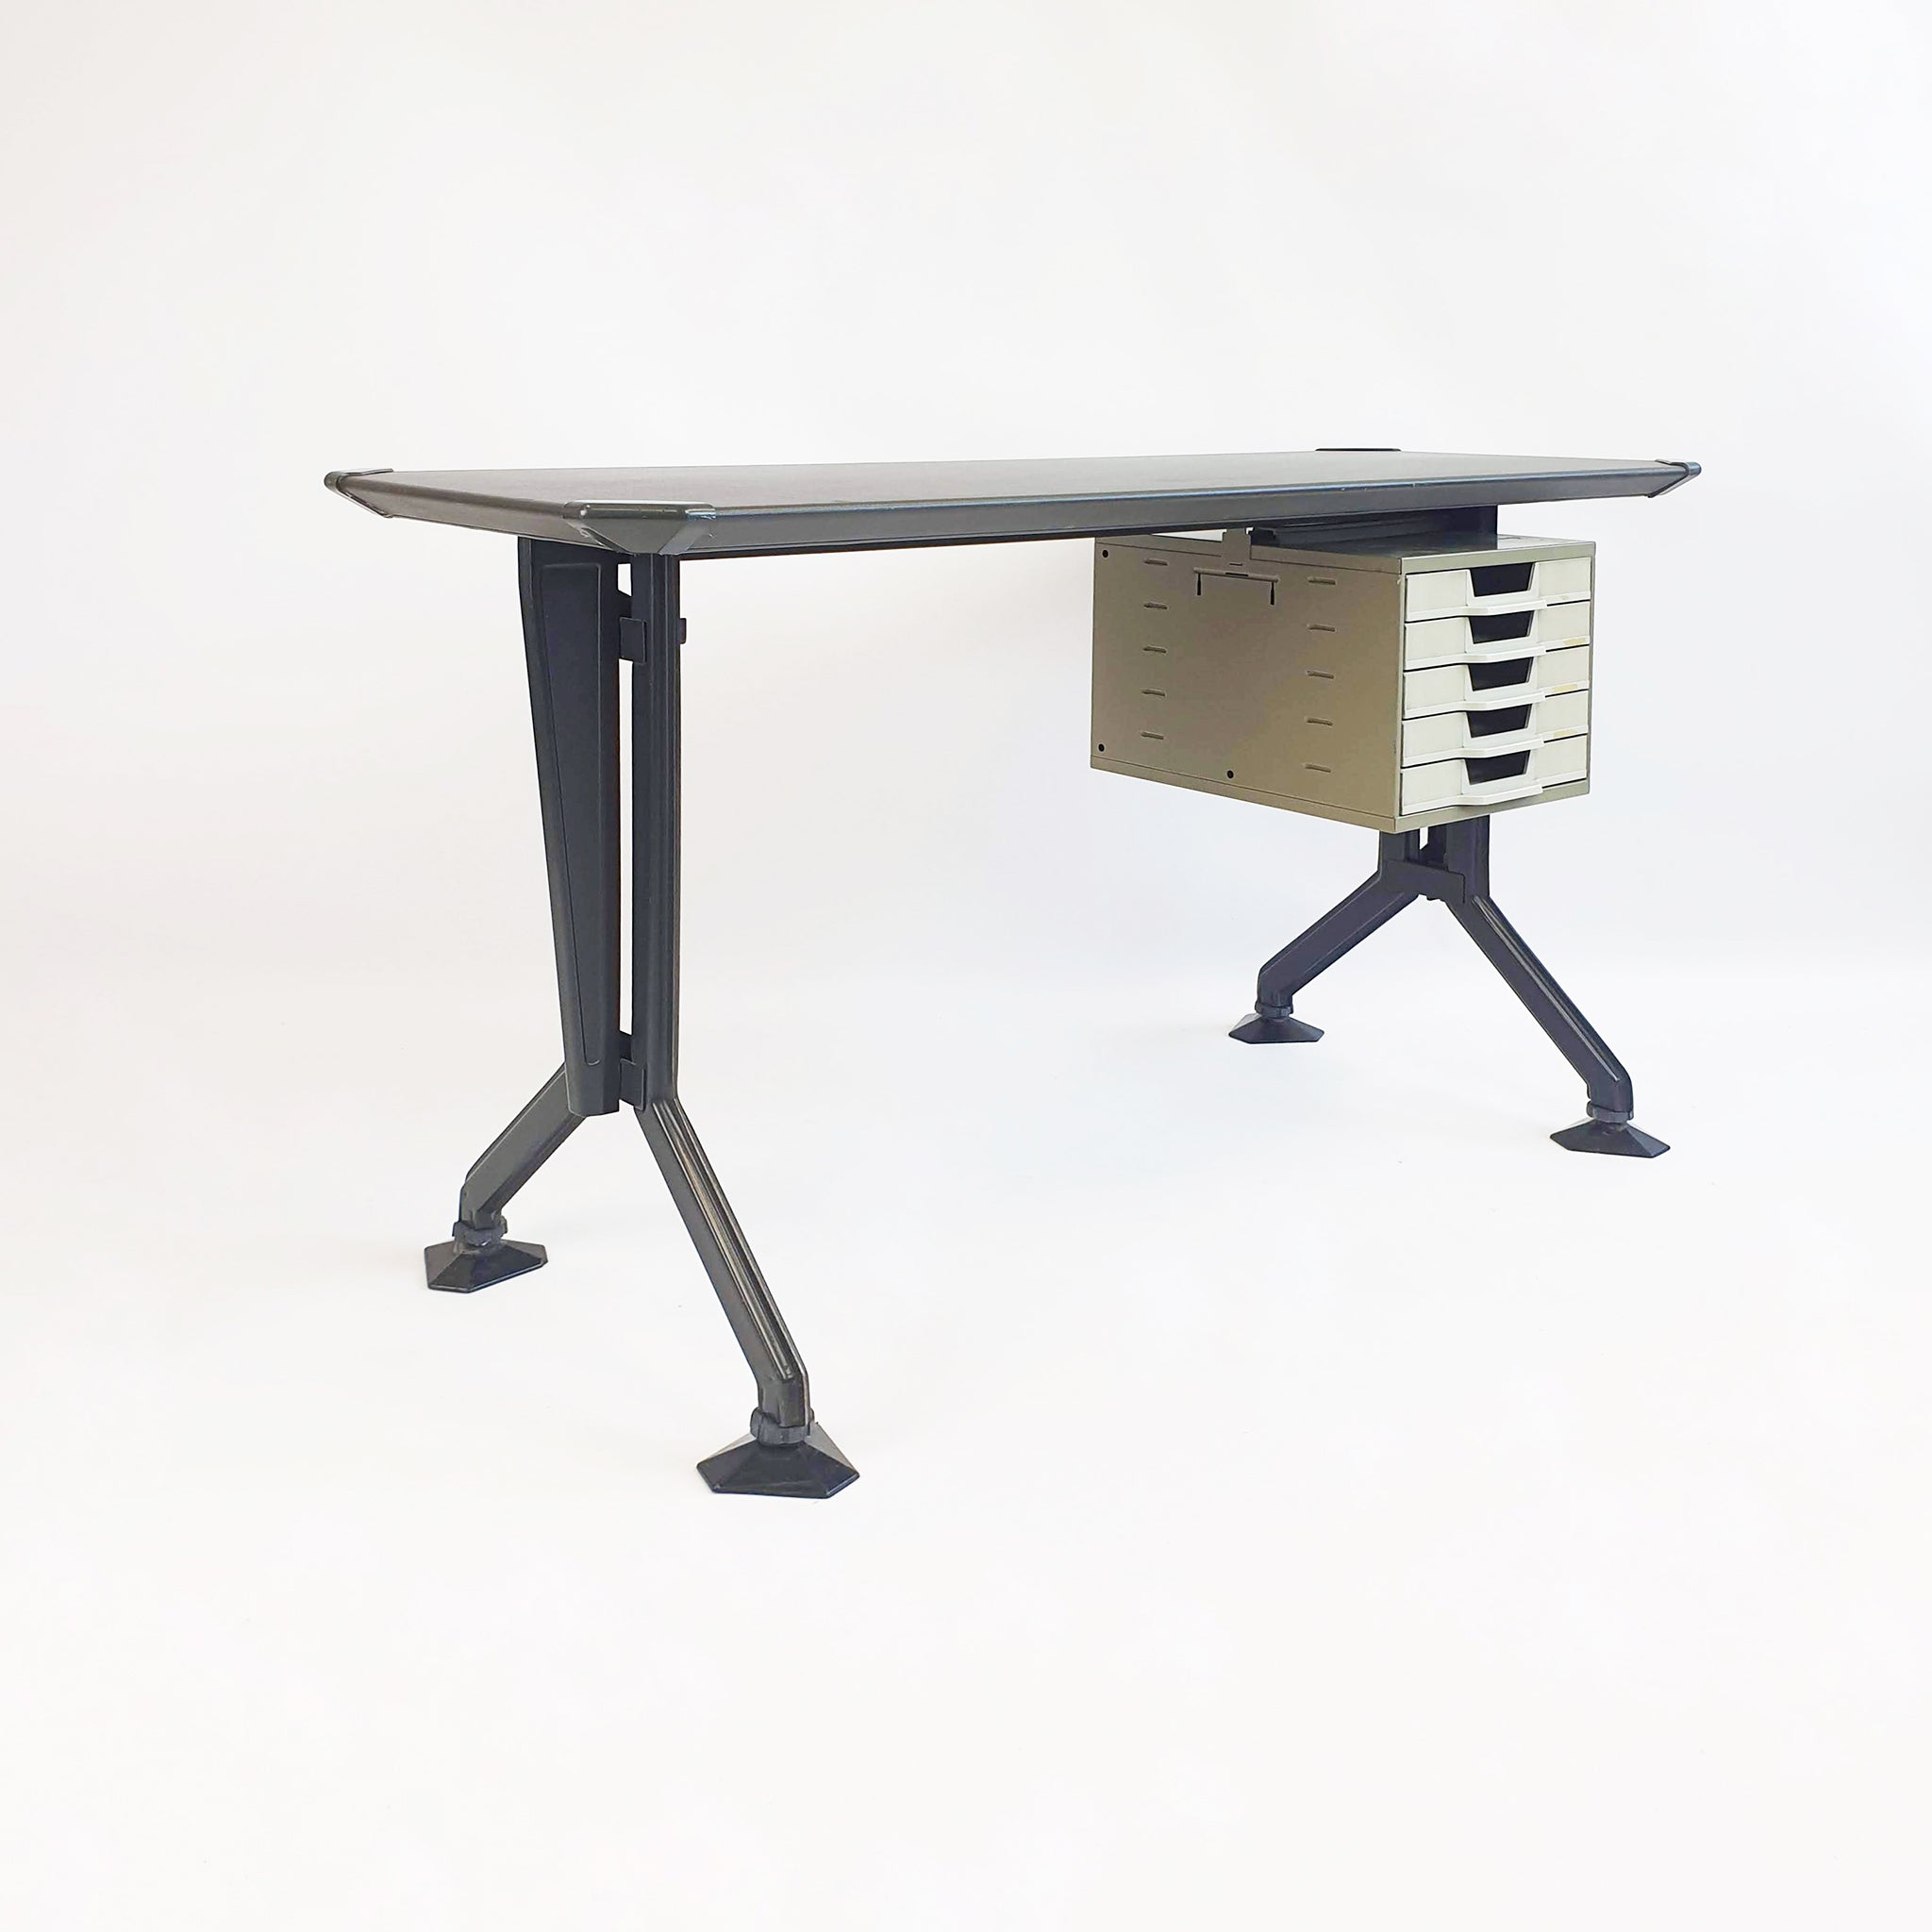 1960s Olivetti desk by Studio BBPR